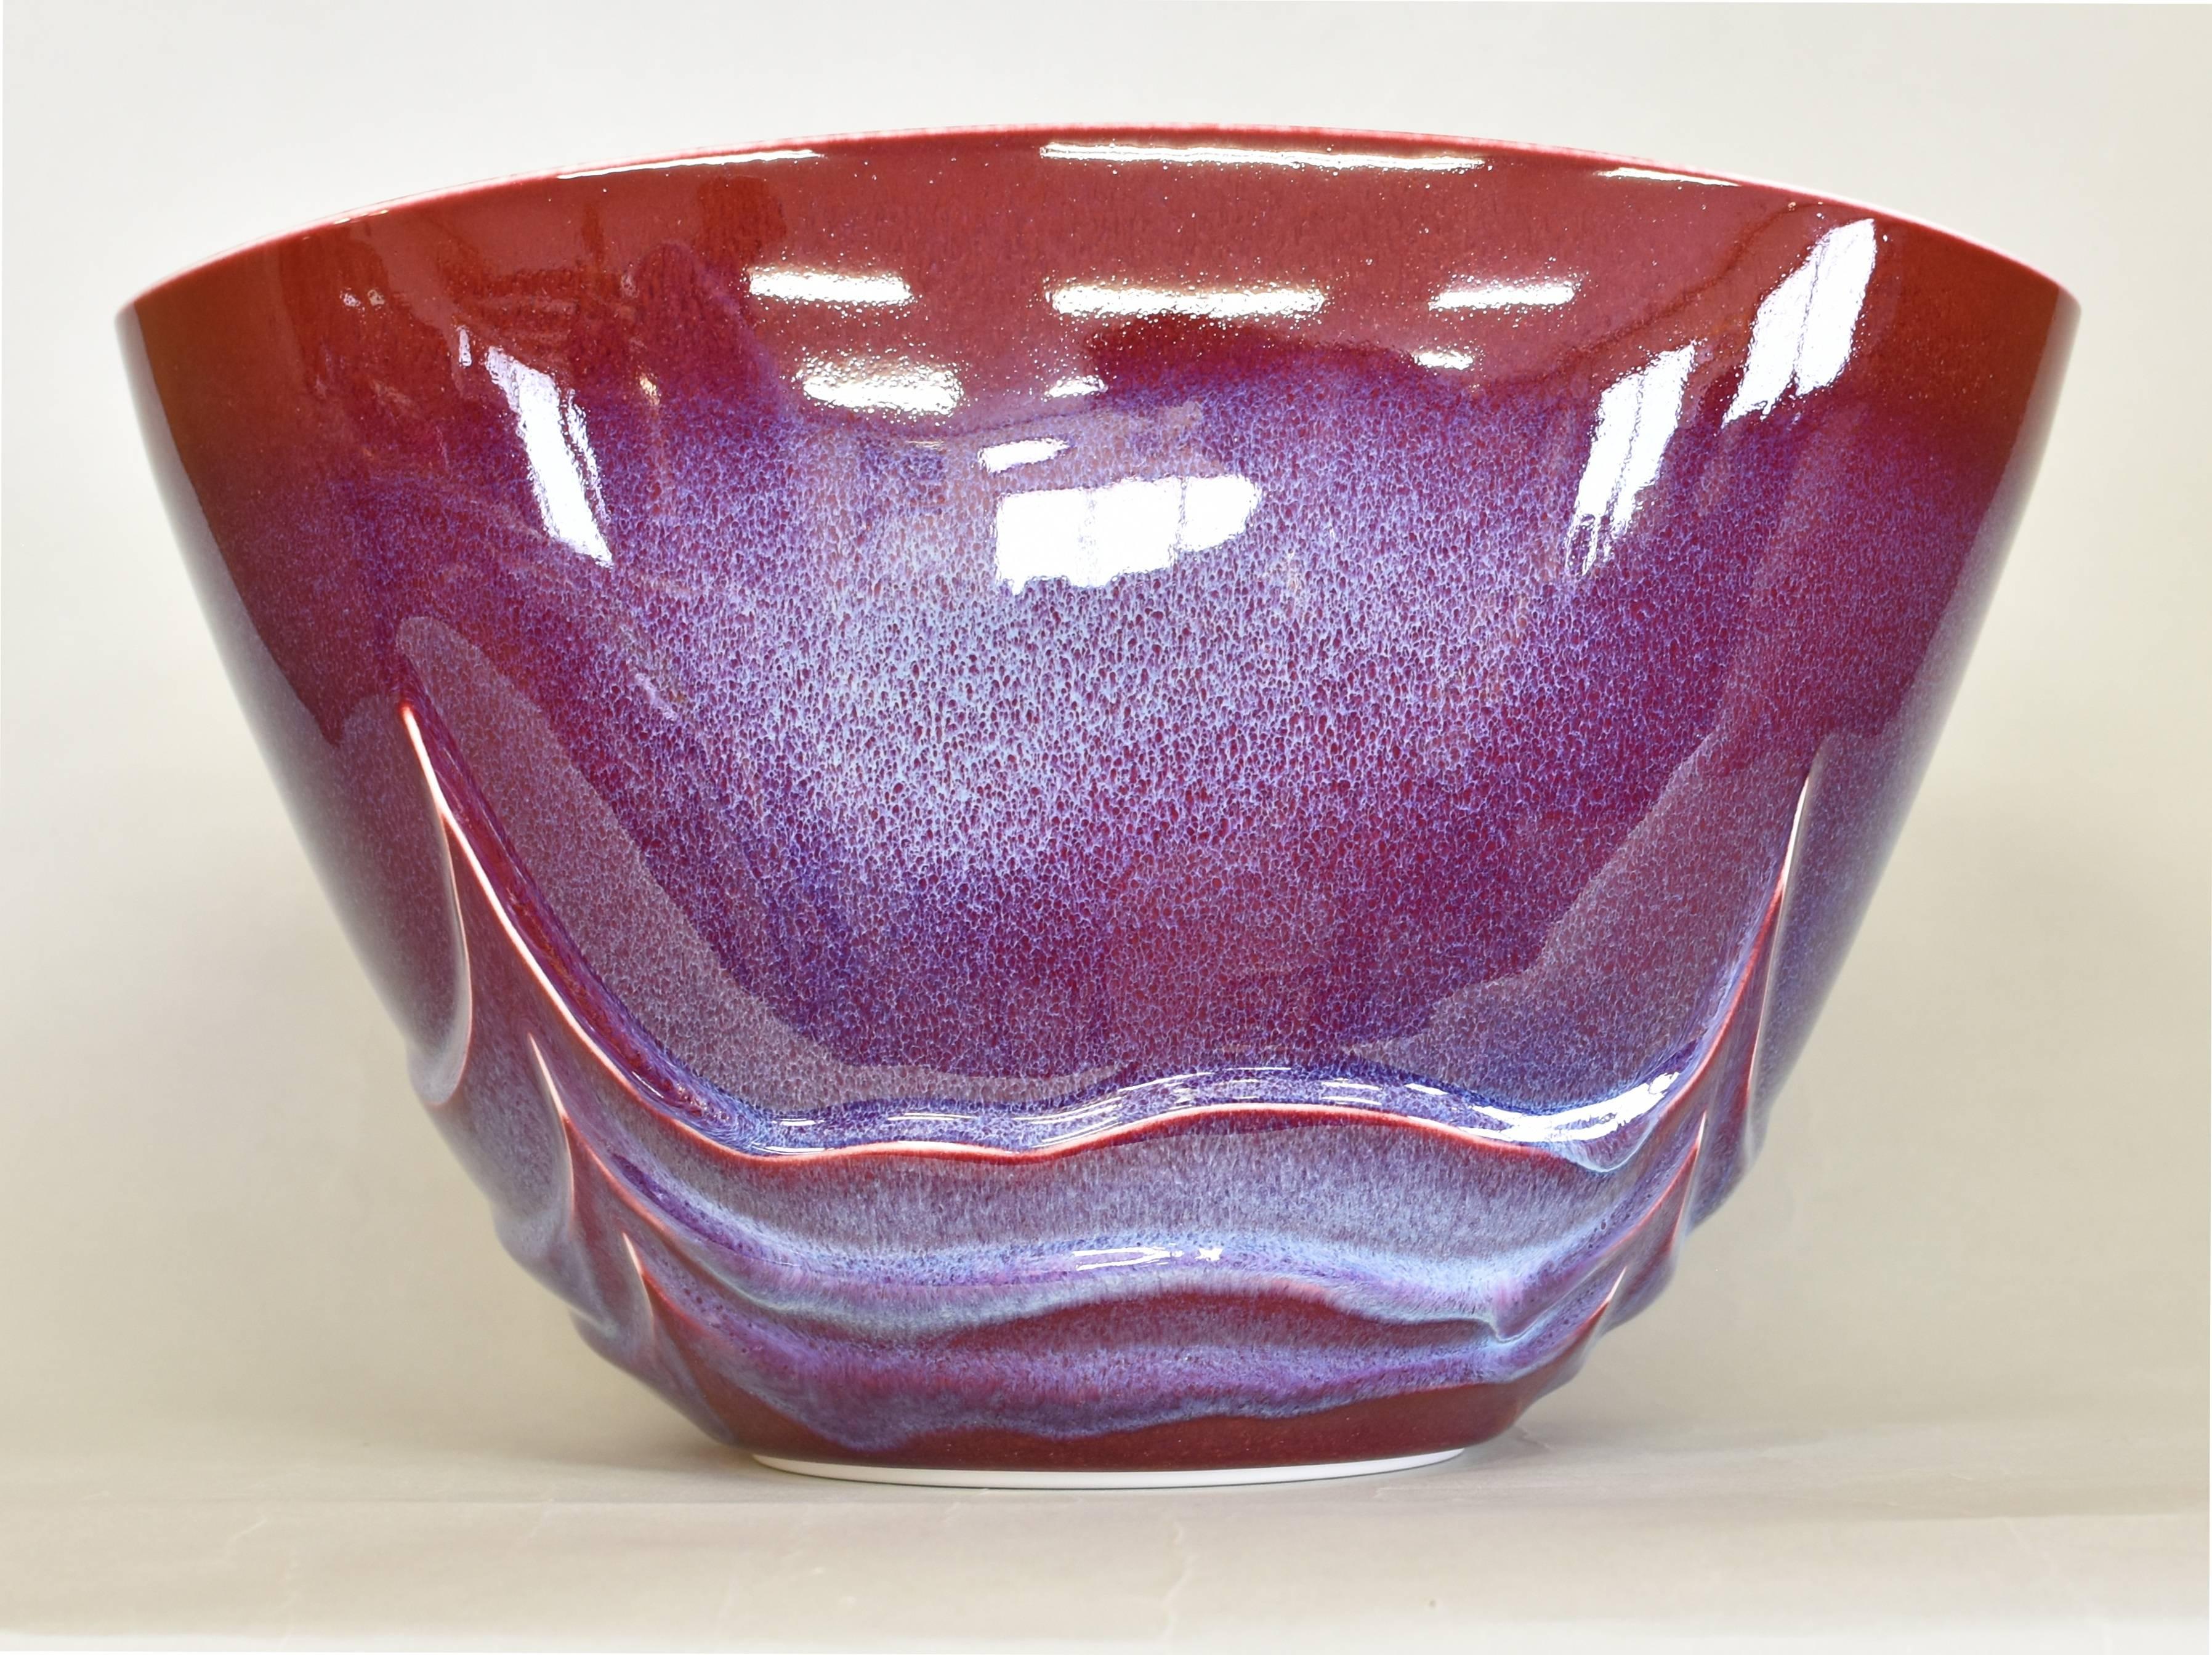  Decorative Glazed Red Decorative Porcelain Vase by Japanese Master Artist 4